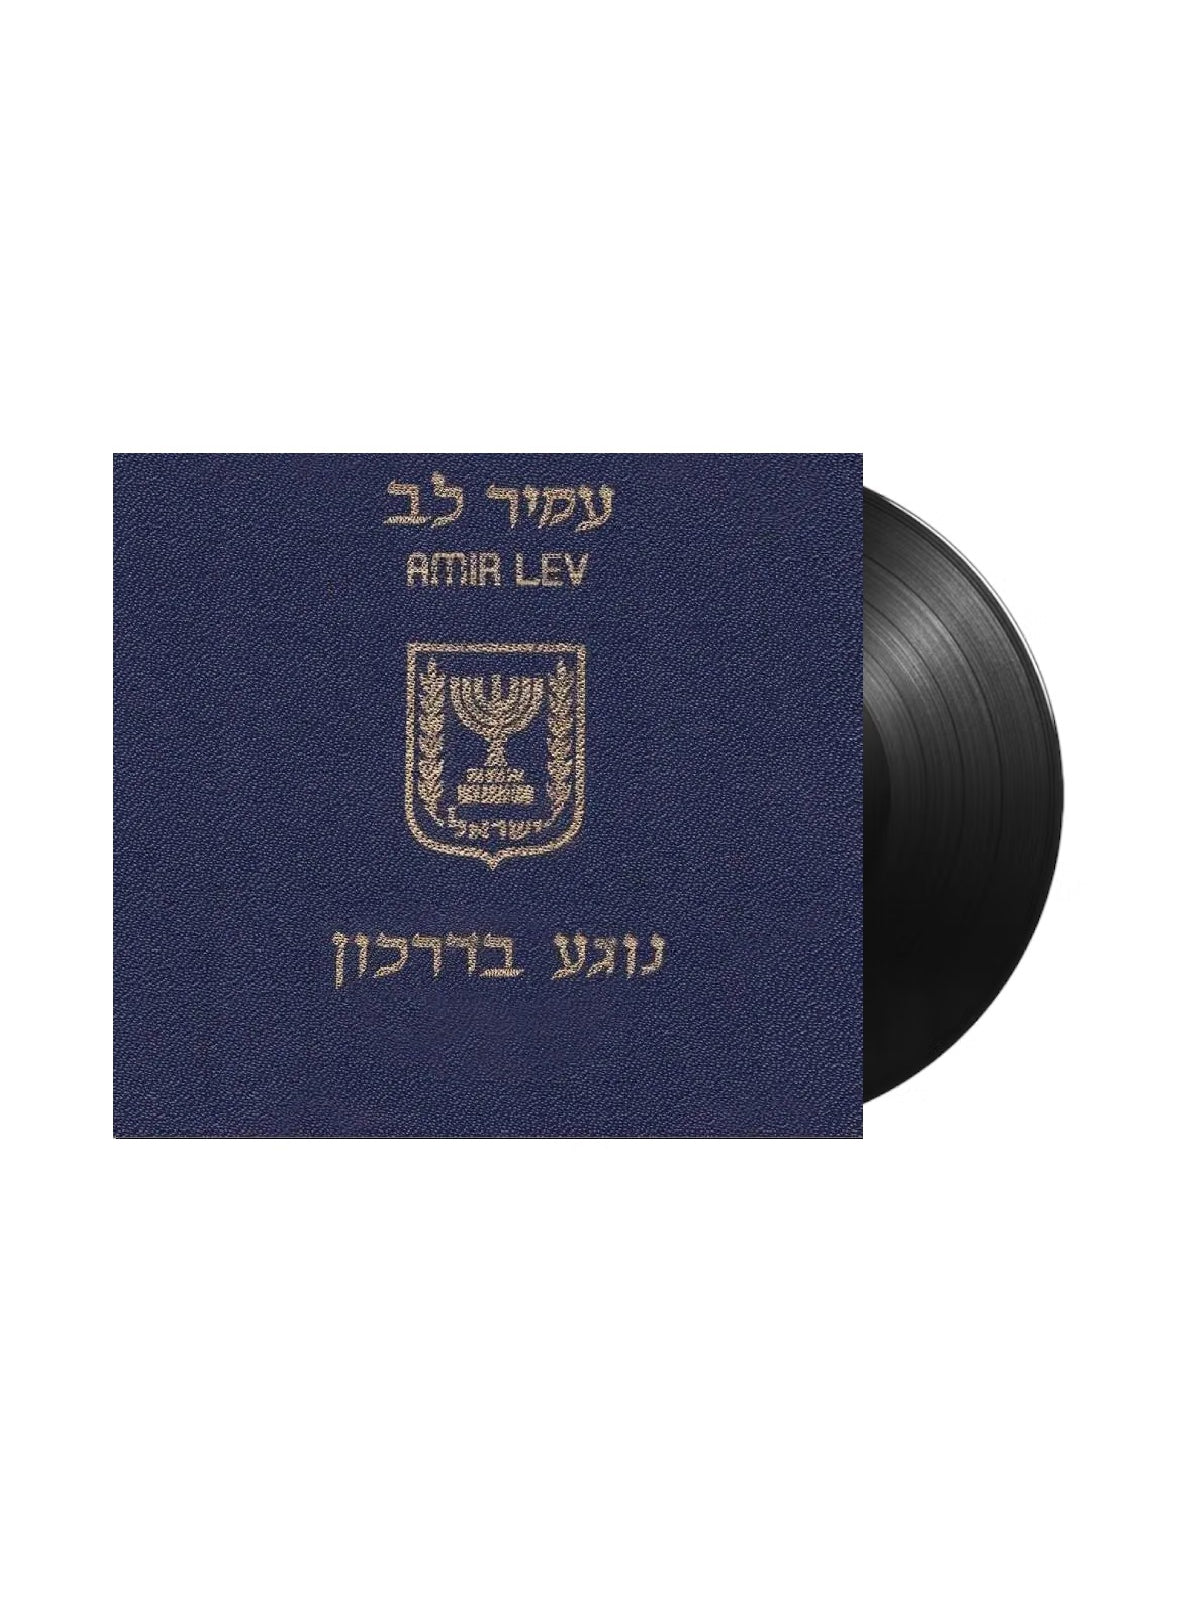 AMIR LEV/TOUCHING THE PASSPORT - VINYL LP